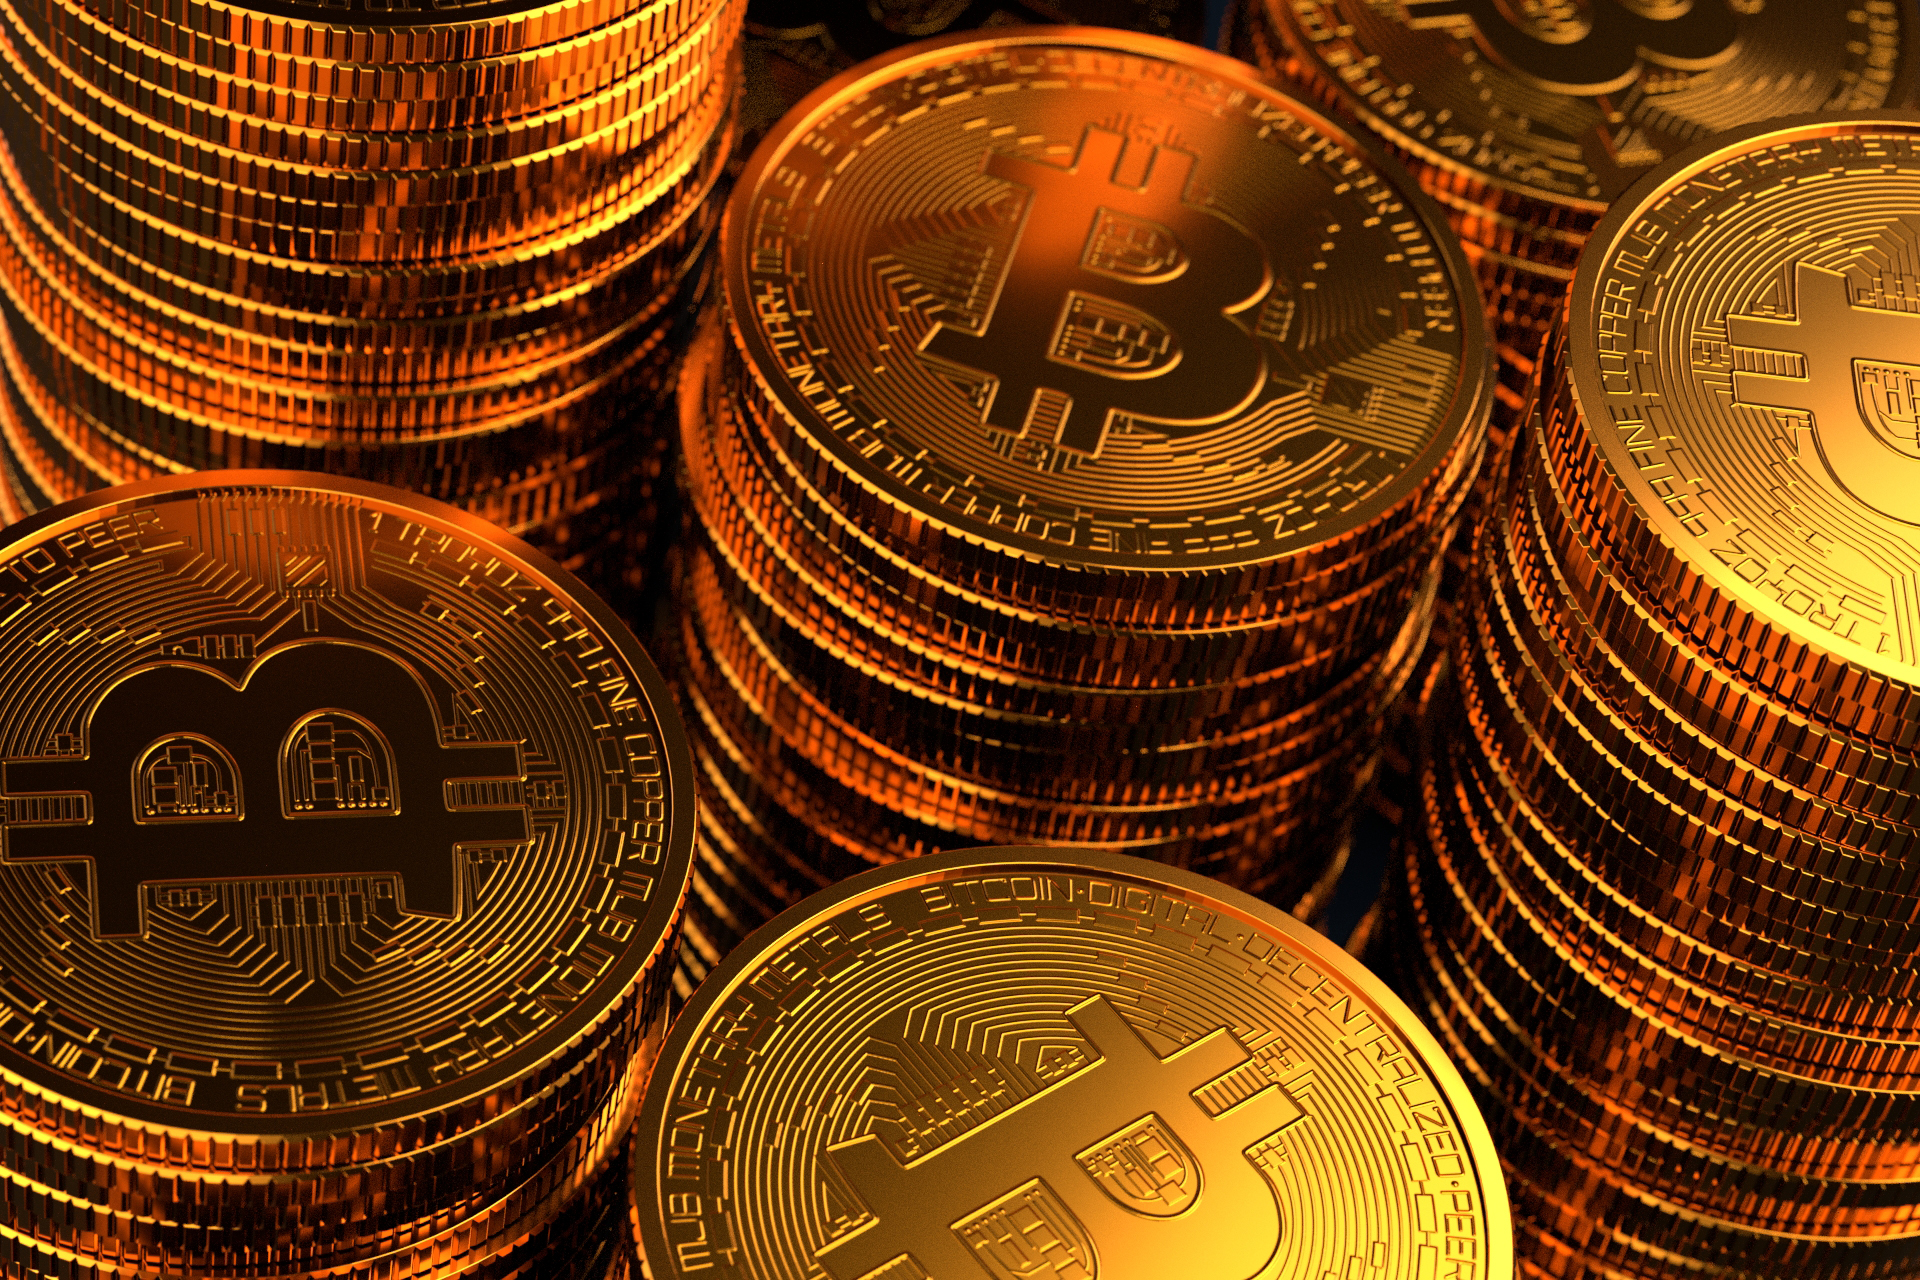 Stacks of bitcoins free image download